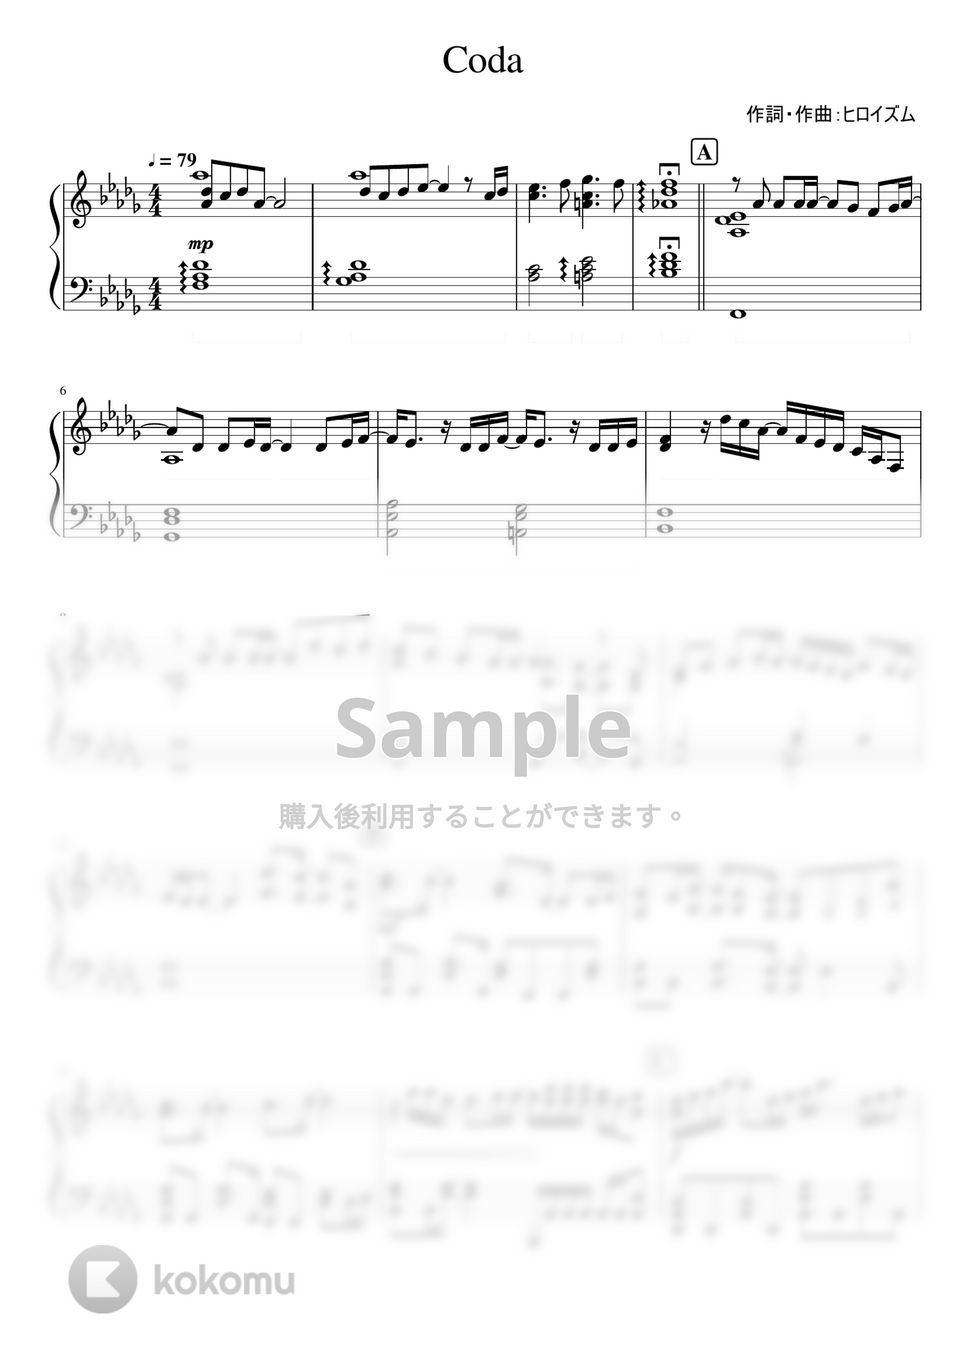 NEWS - Coda (NEWS 12thアルバム｢音楽｣) by ピアノぷりん